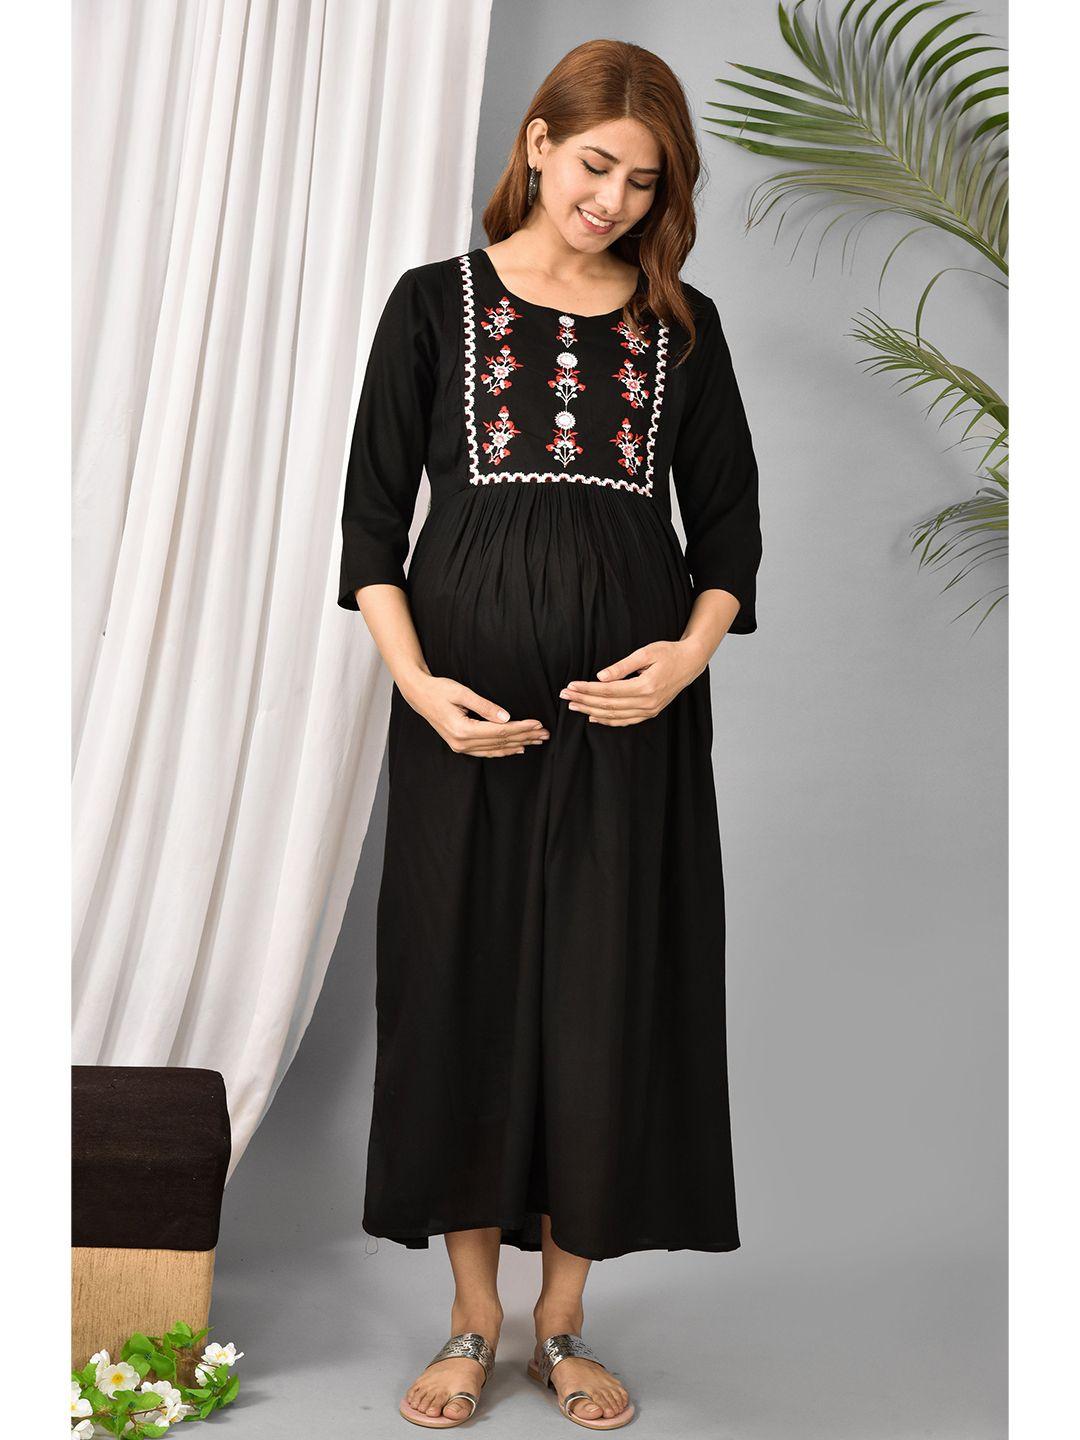 kalini maternity black & white floral embroidered empire maxi dress